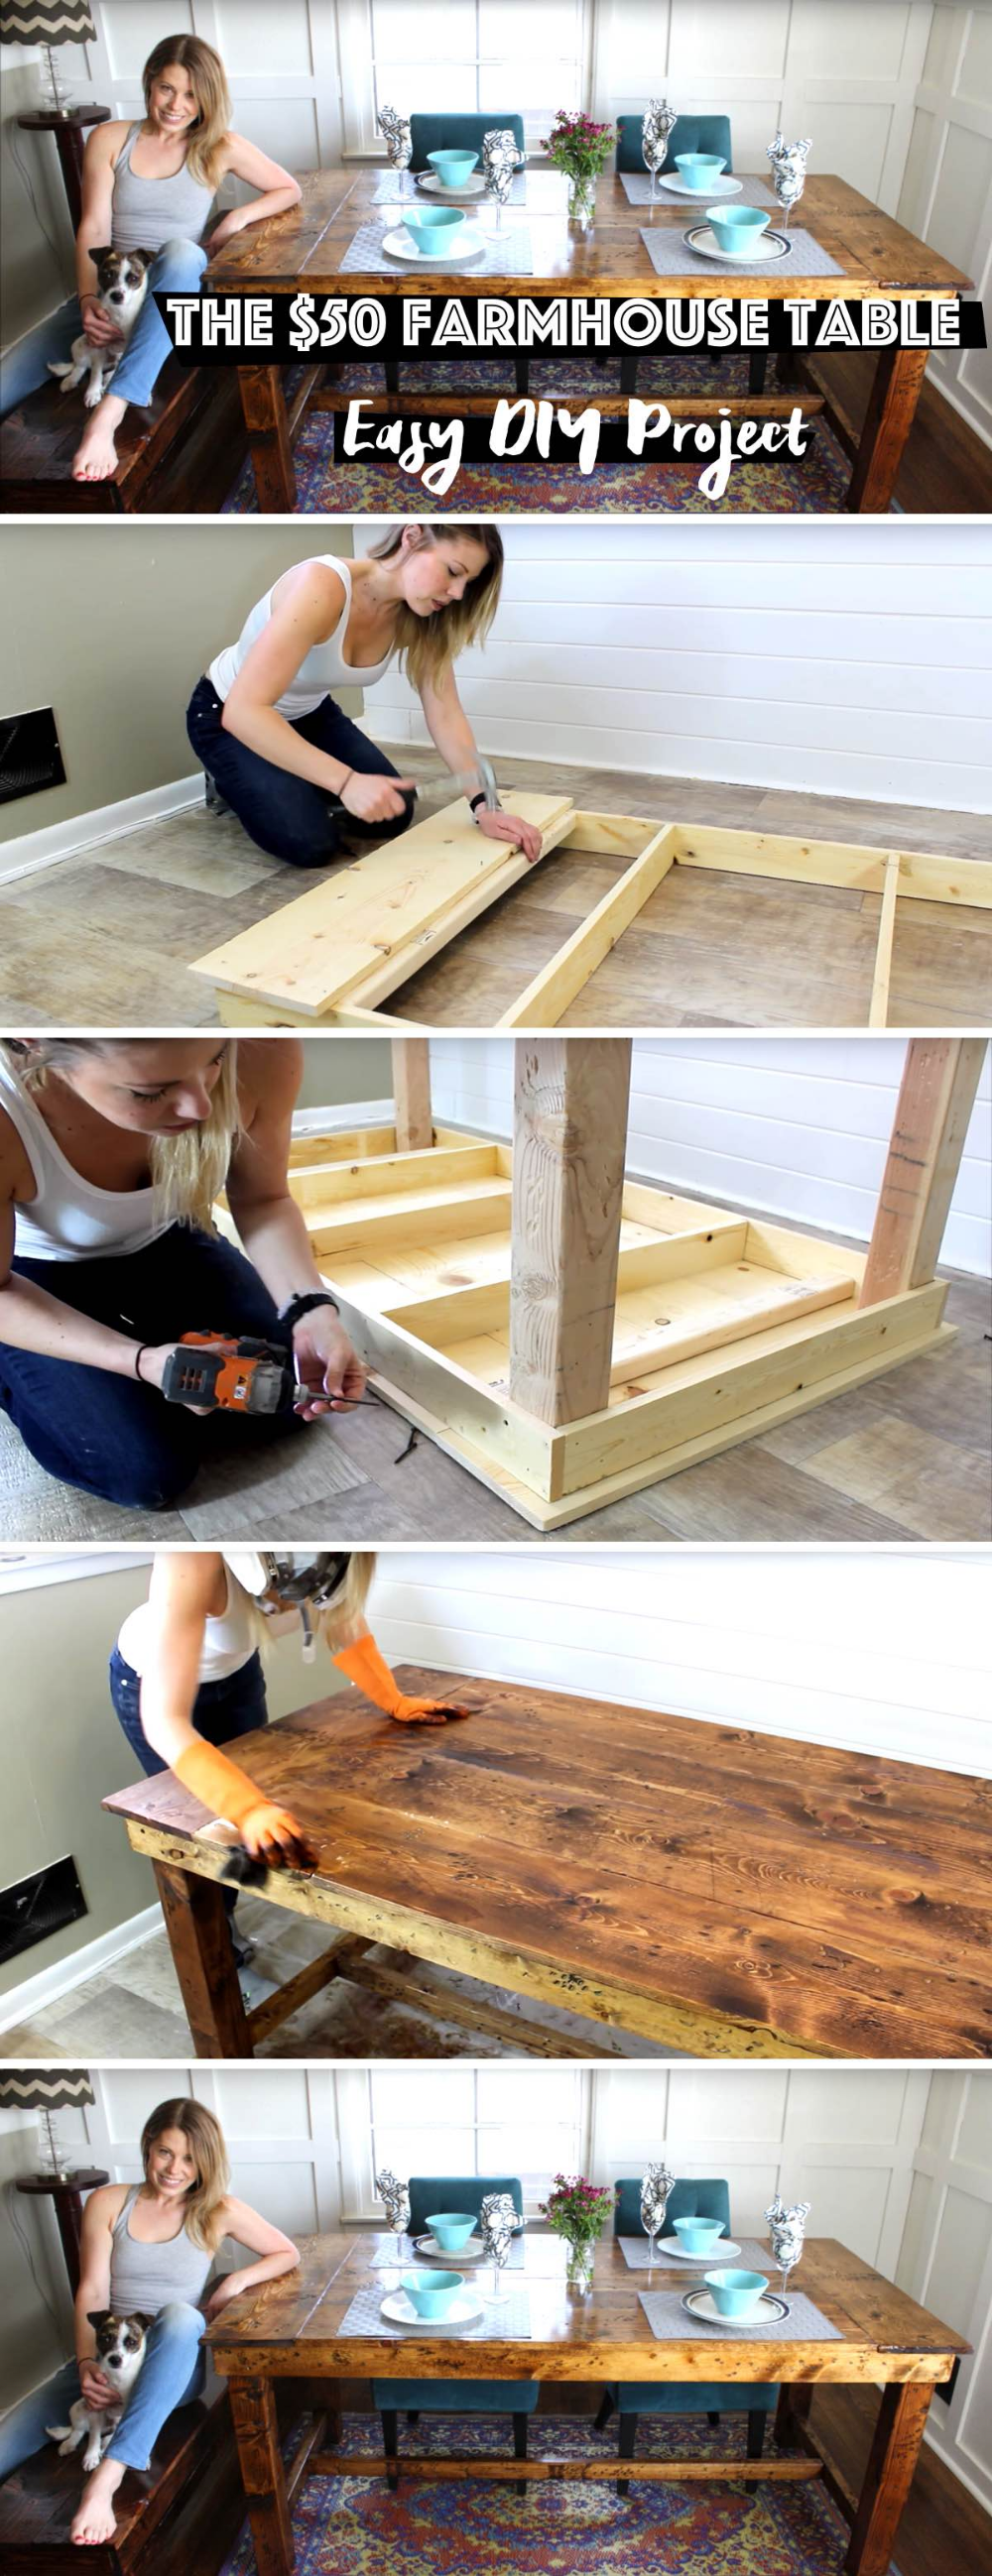 The $50 Farmhouse Table - Easy DIY Project - The $50 Farmhouse Table - Easy DIY Project -   18 easy diy Projects ideas